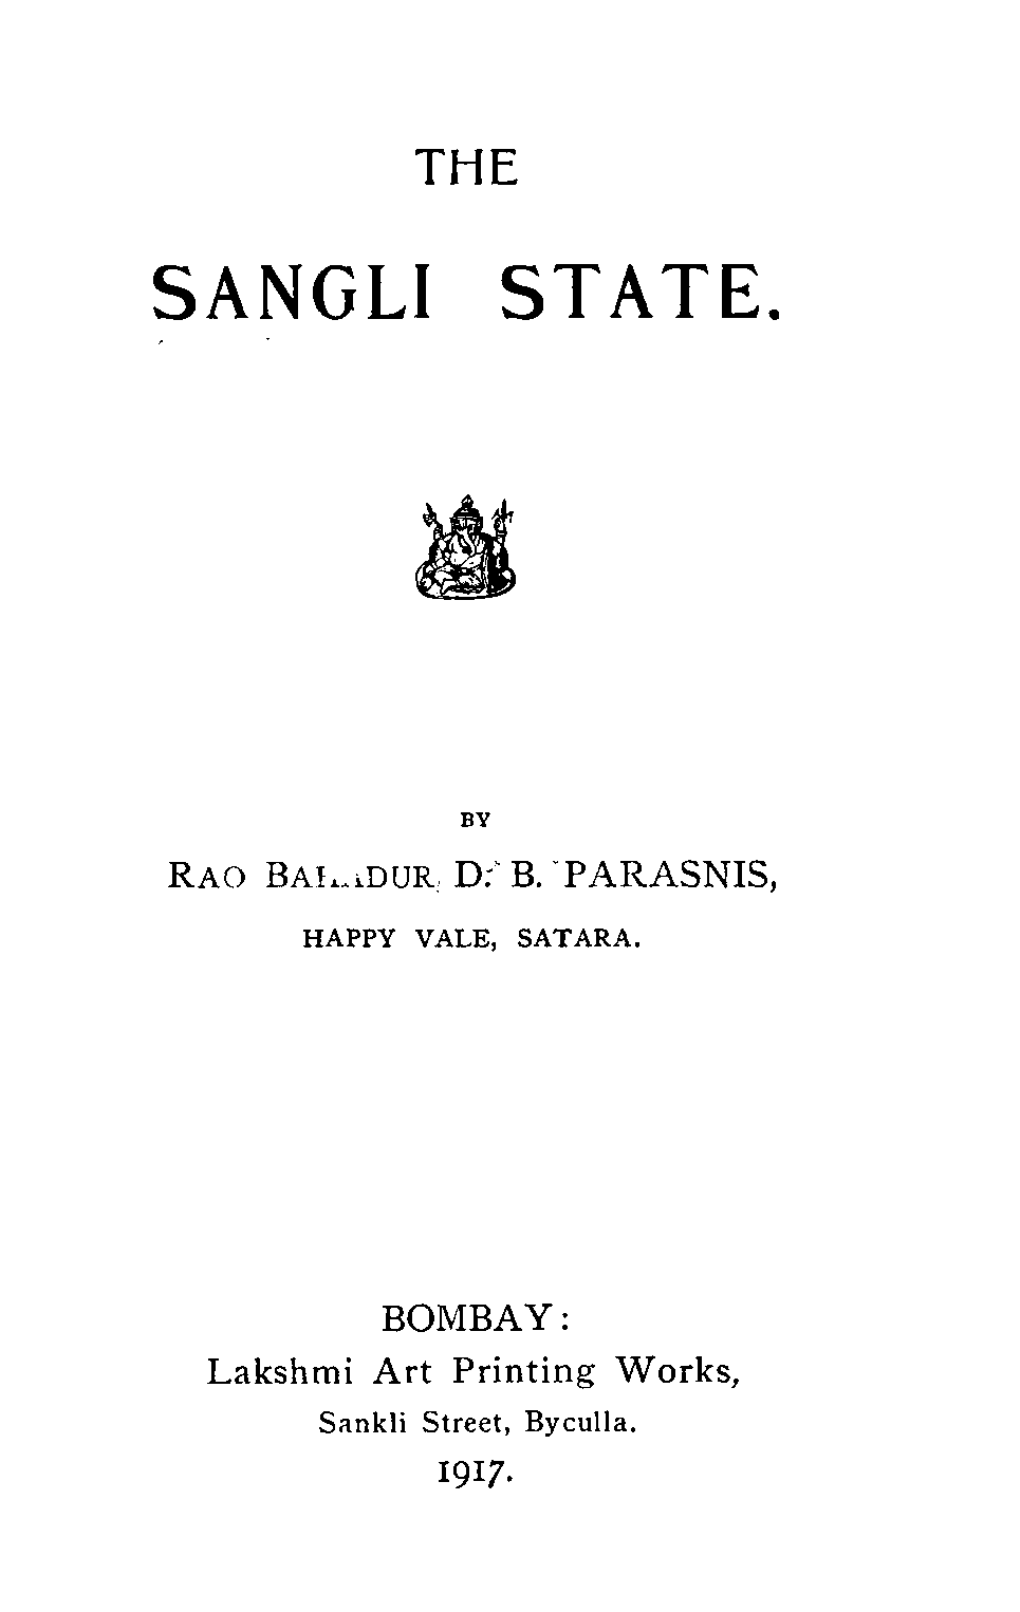 The Sangli State